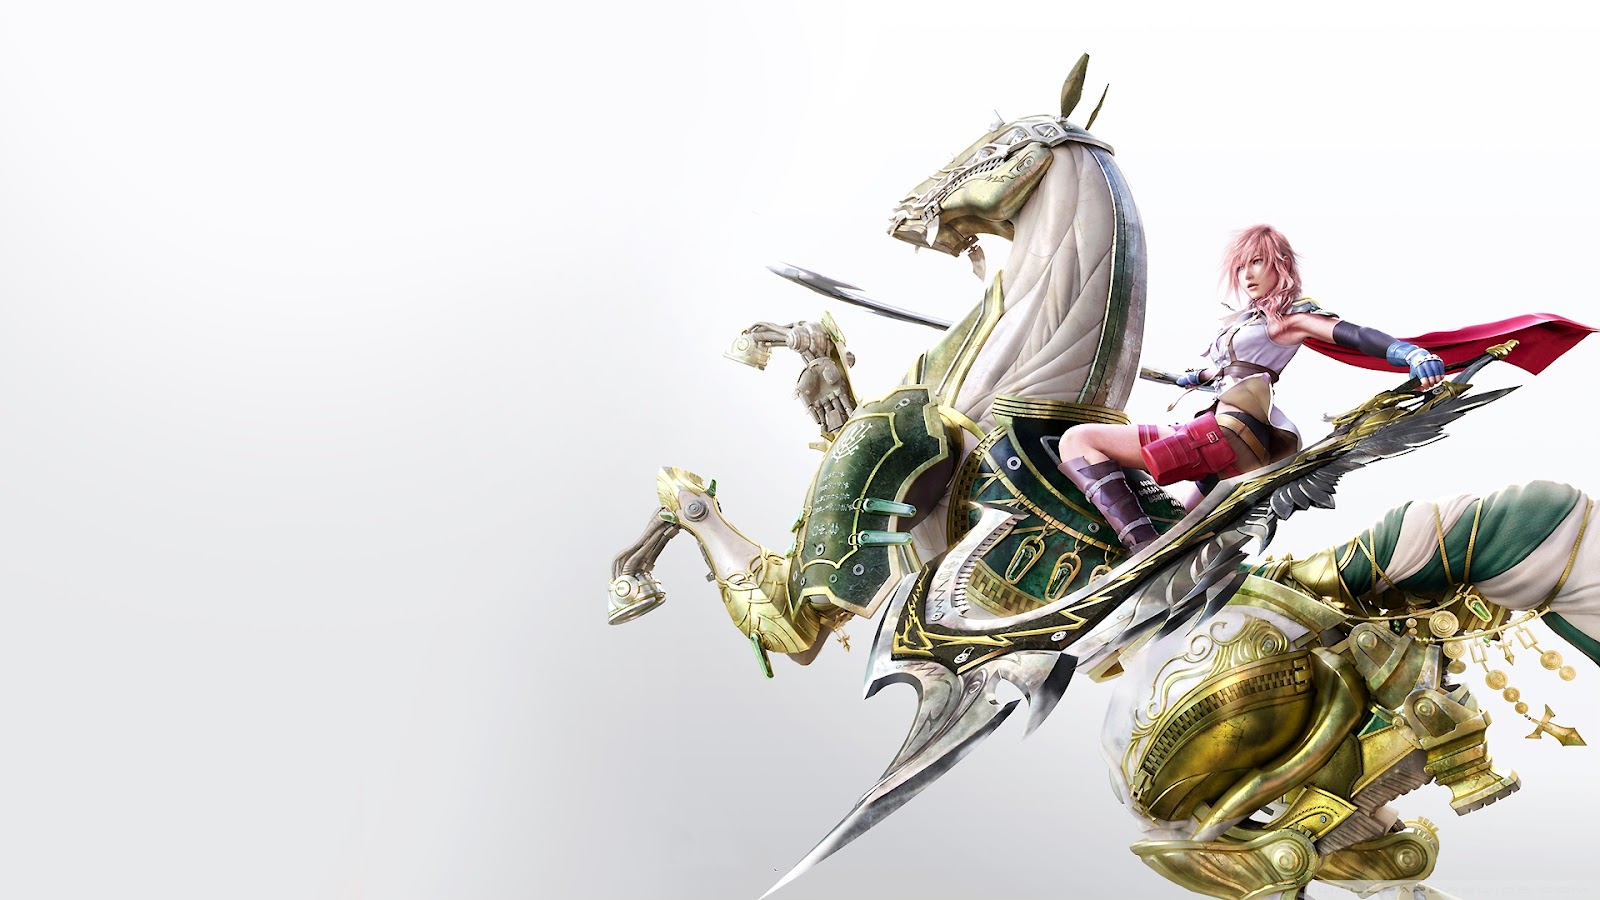  49 Final Fantasy  Xiii Wallpaper  1080p on WallpaperSafari